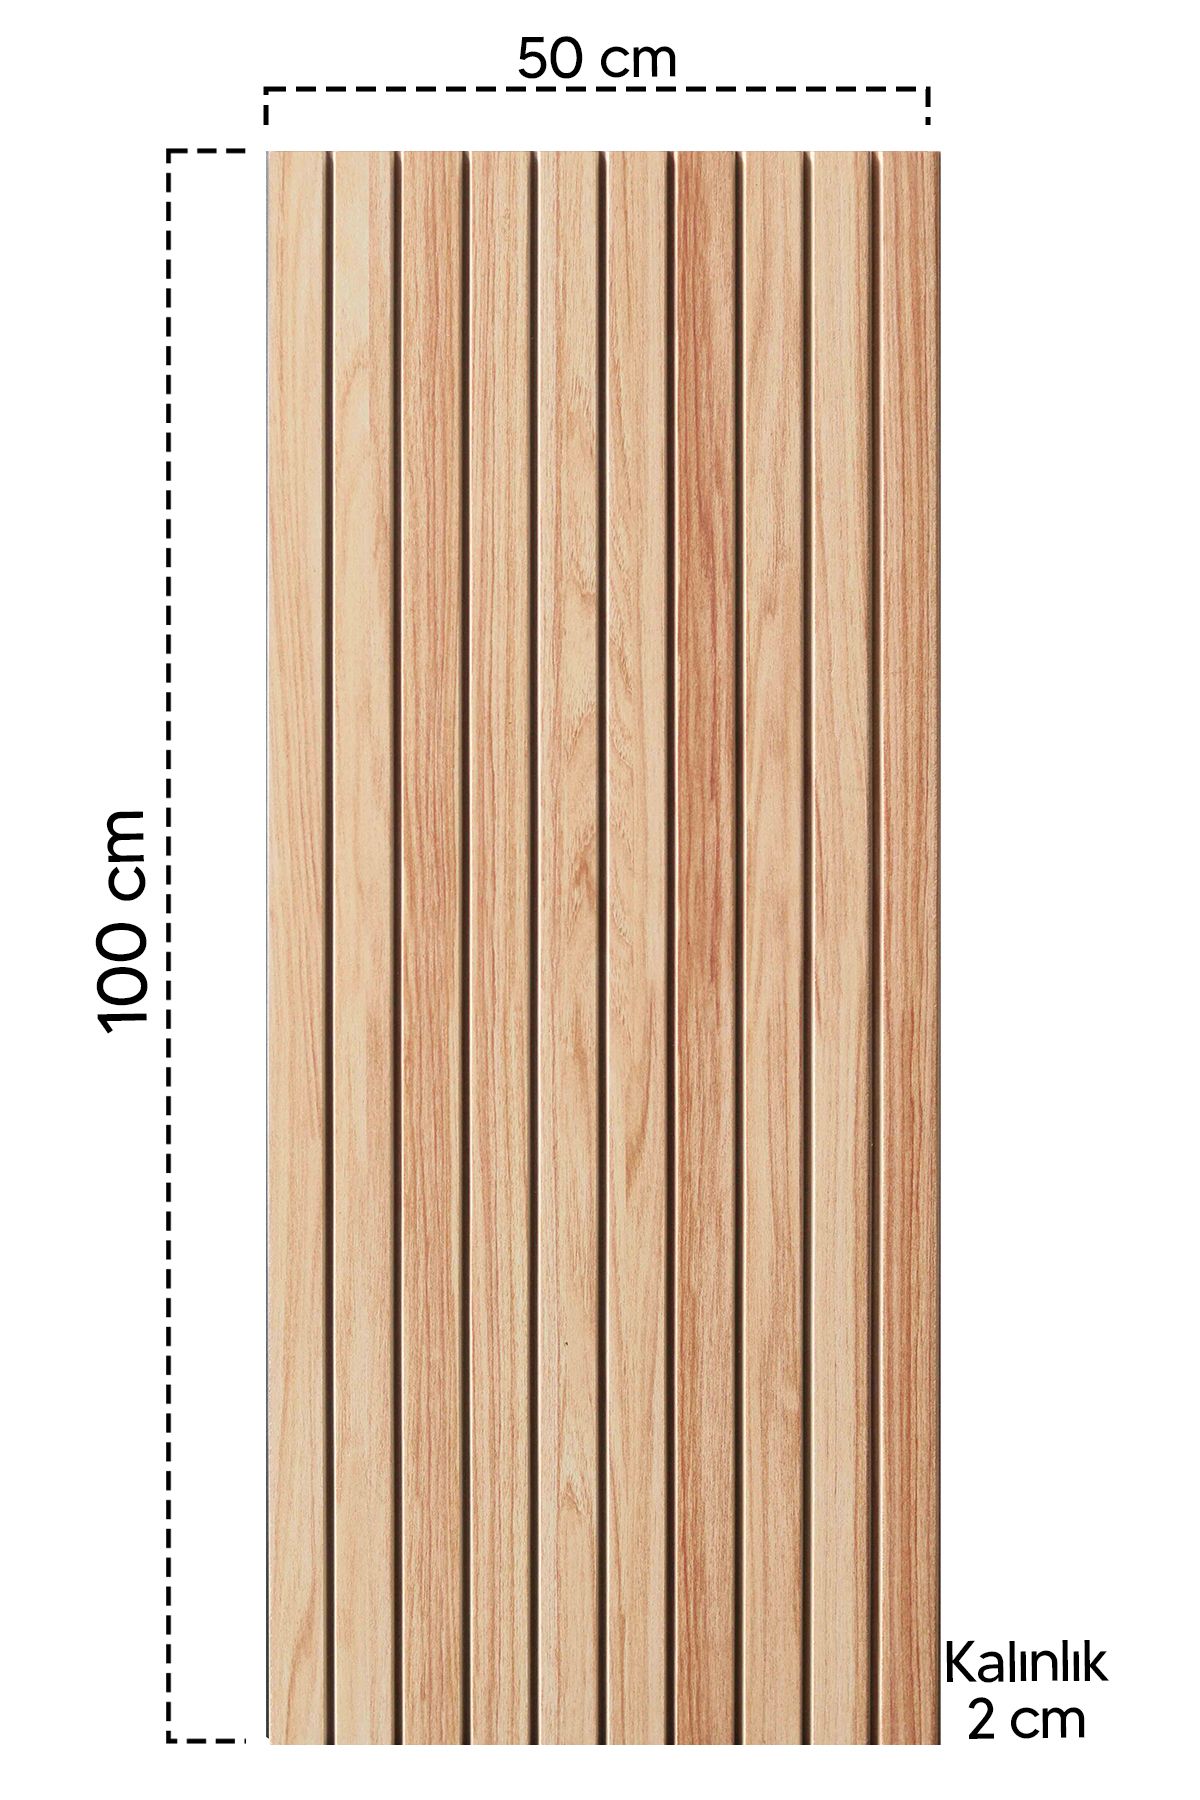 Stikwall Ahşap Görünümlü Strafor Duvar Kaplama Paneli 910-201 - 50x100